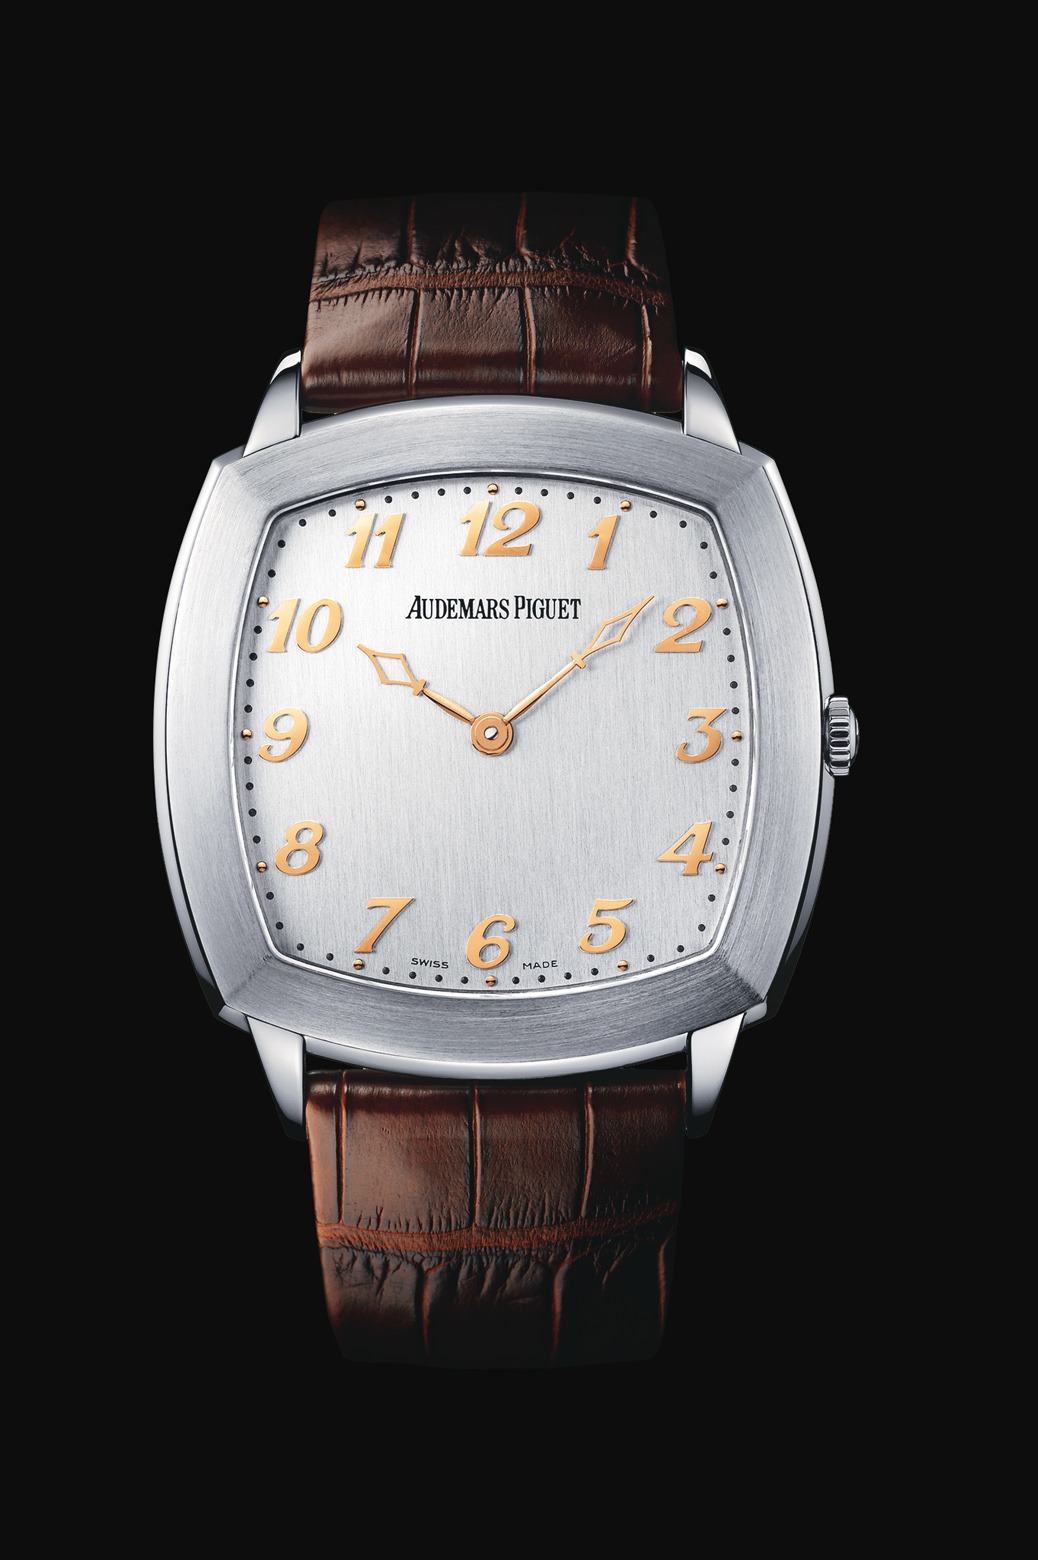 Audemars Piguet Tradition Extra-Thin Platinum watch REF: 15160PT.OO.A092CR.01